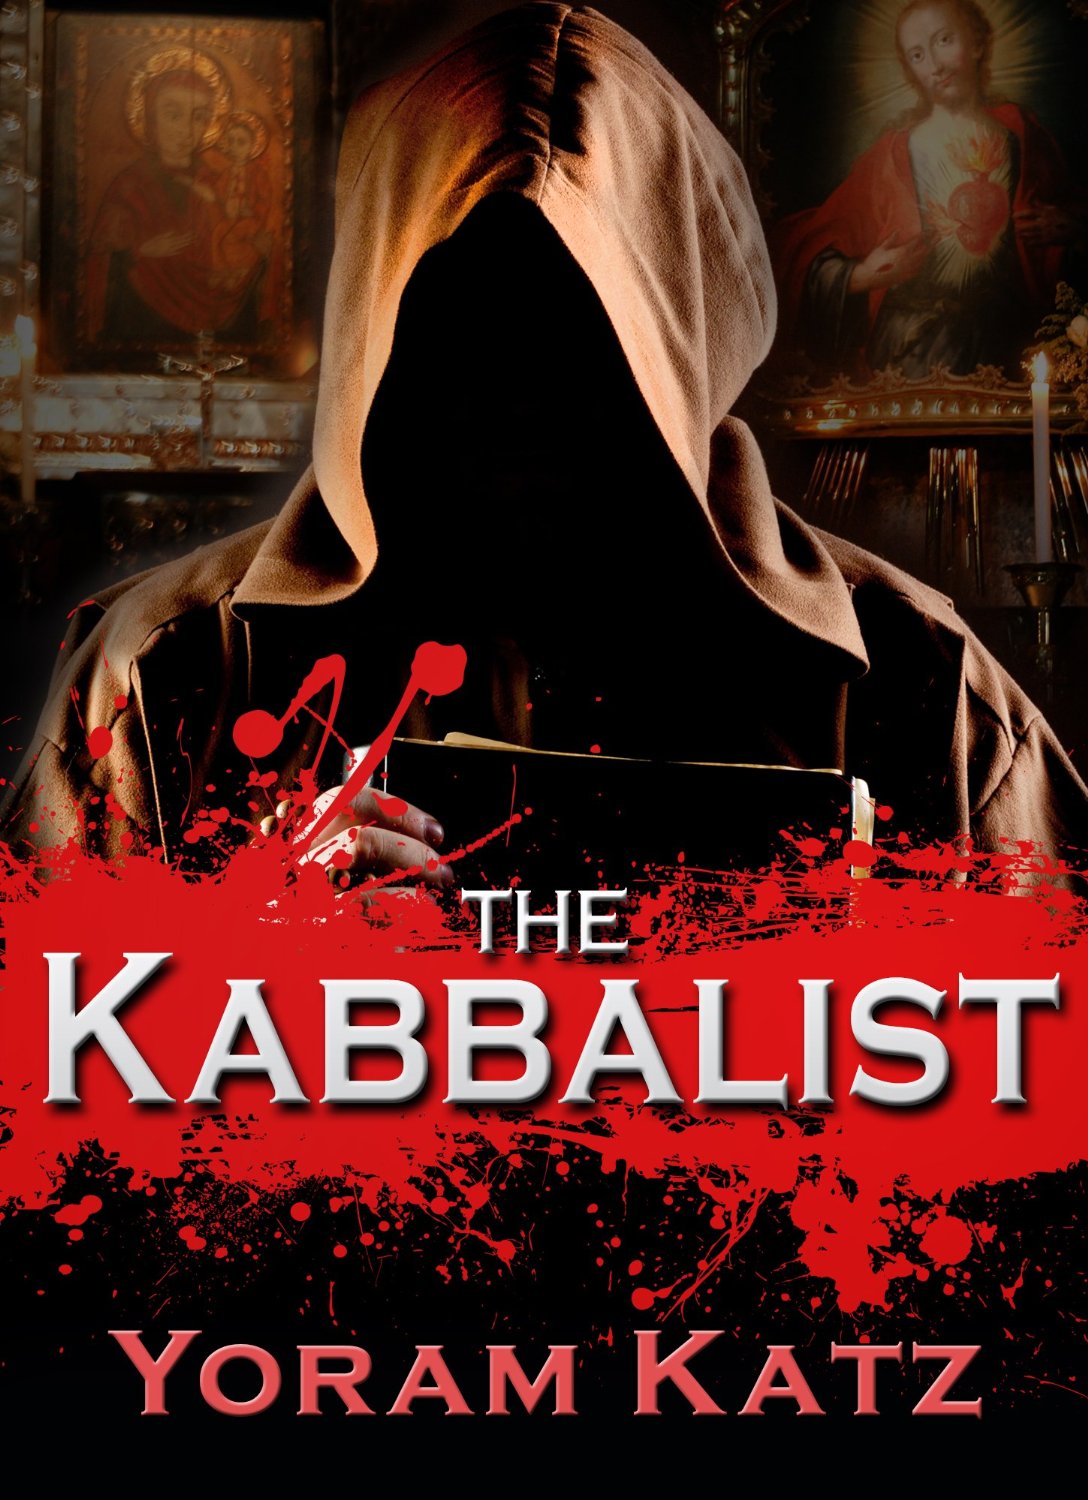 The Kabbalist by Yoram Katz